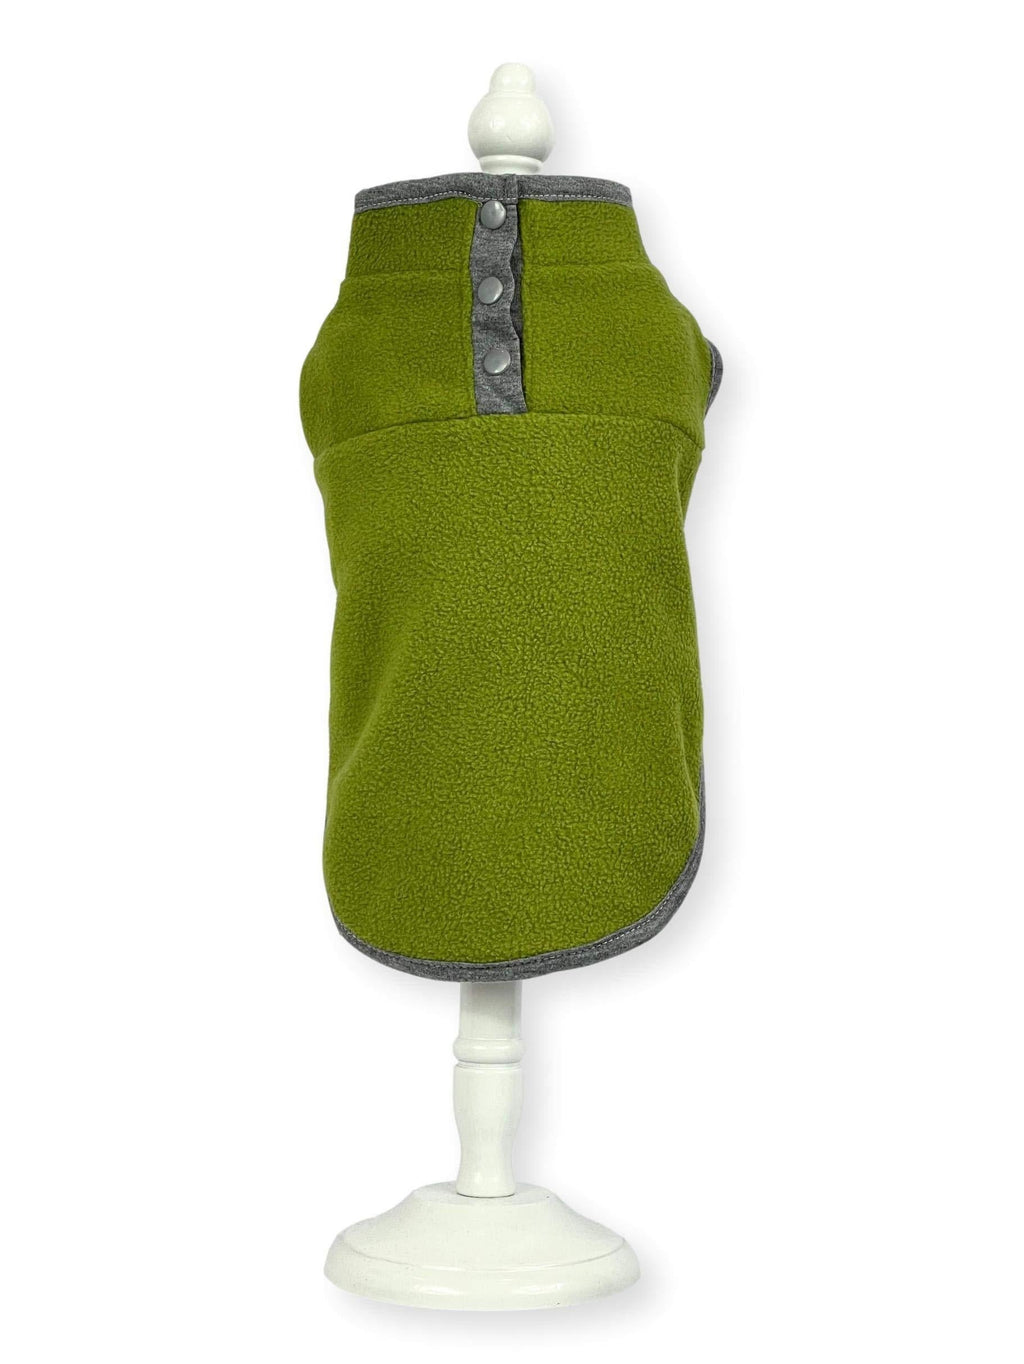 Cara Mia Dogwear Lightweight Button Neck Dog Fleece Vest Shirt Coat (M, Green/Grey) M - PawsPlanet Australia